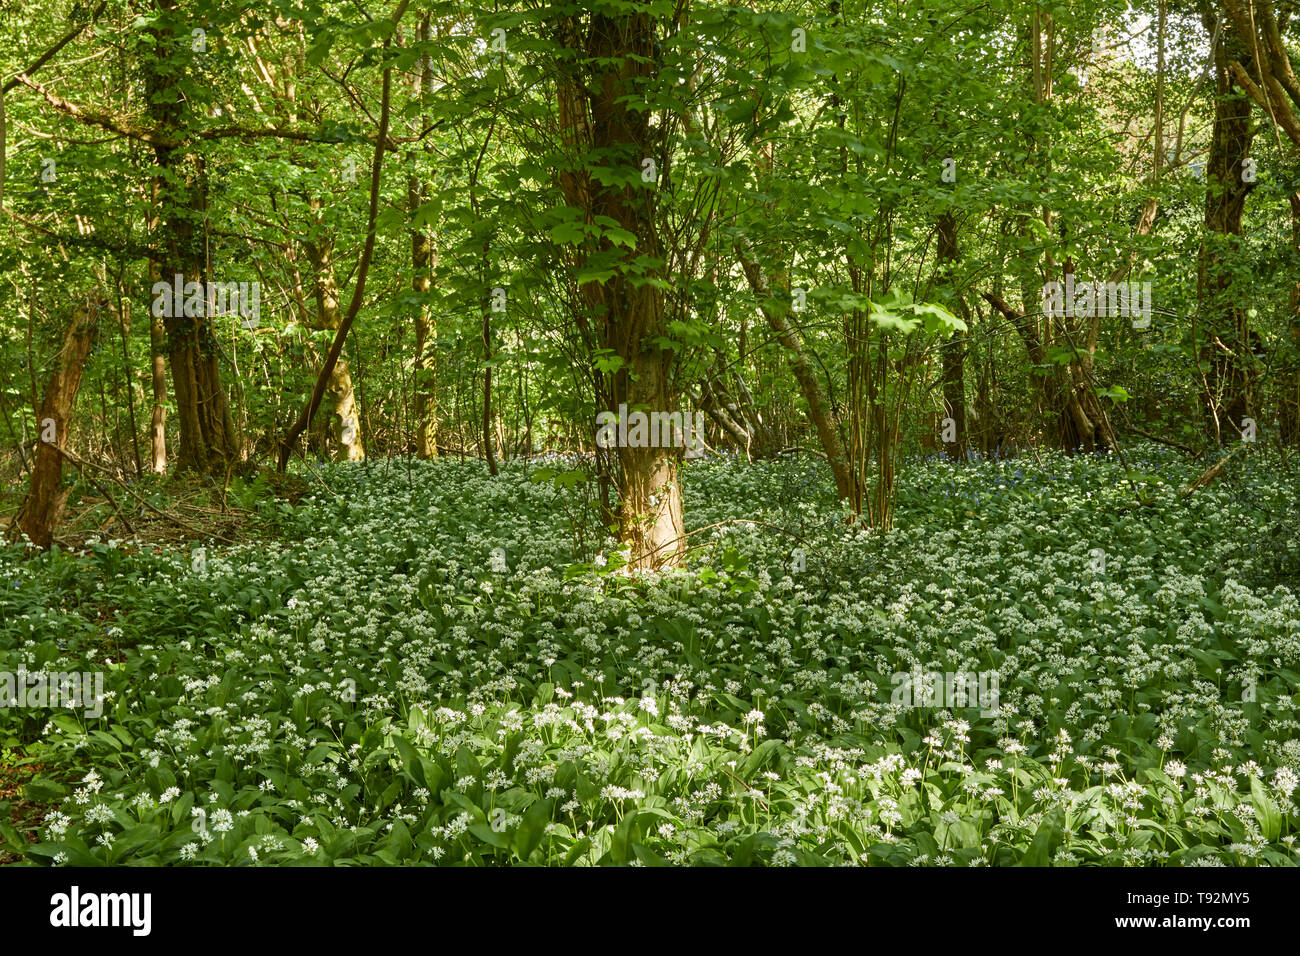 Wild garlic, ransoms in a spring woodland landscape, England, United Kingdom, Europe Stock Photo